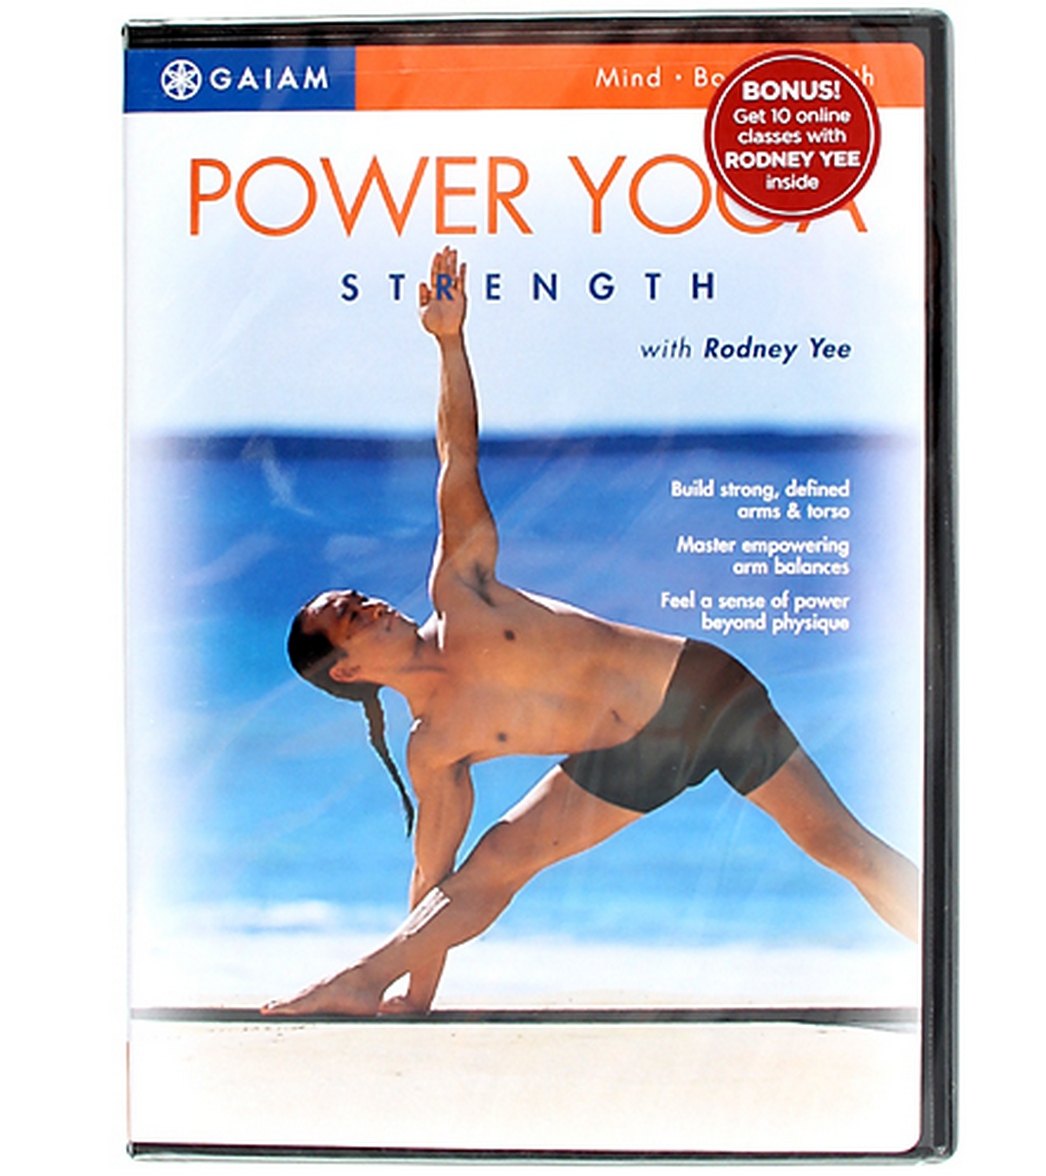 Gaiam Power Yoga Strength DVD at